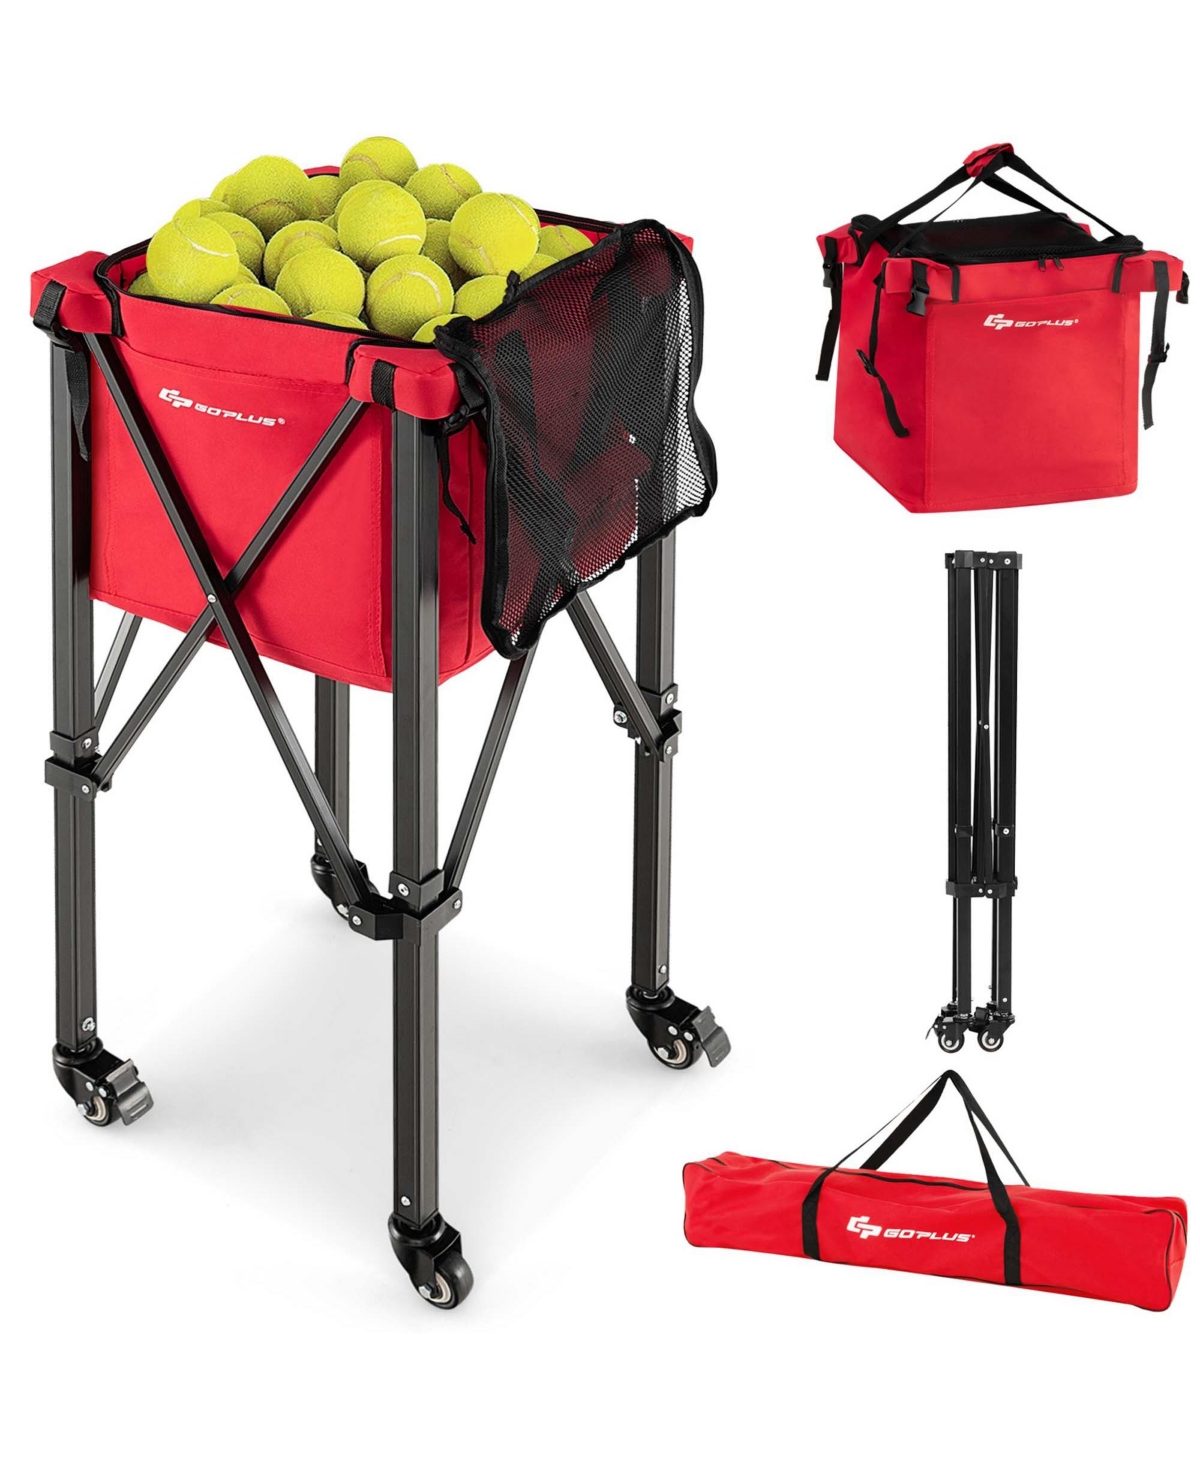 Foldable Tennis Ball Hopper Basket Portable Travel Teaching Cart with Wheels & Bag - Red